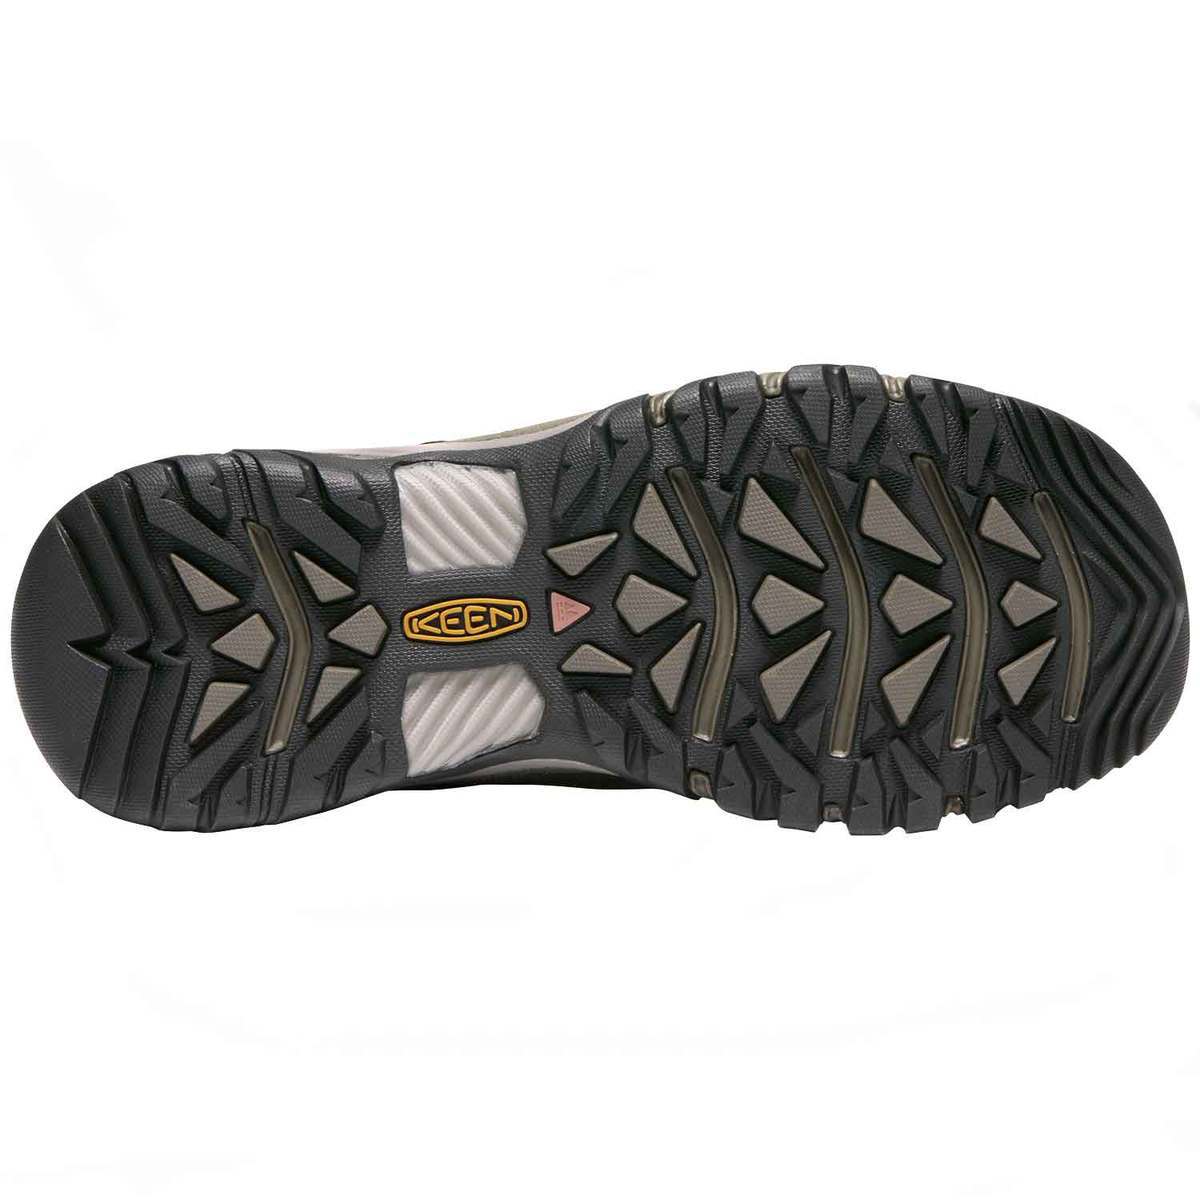 KEEN Men's Targhee III Waterproof Low Hiking Shoes - Black Olive - Size ...